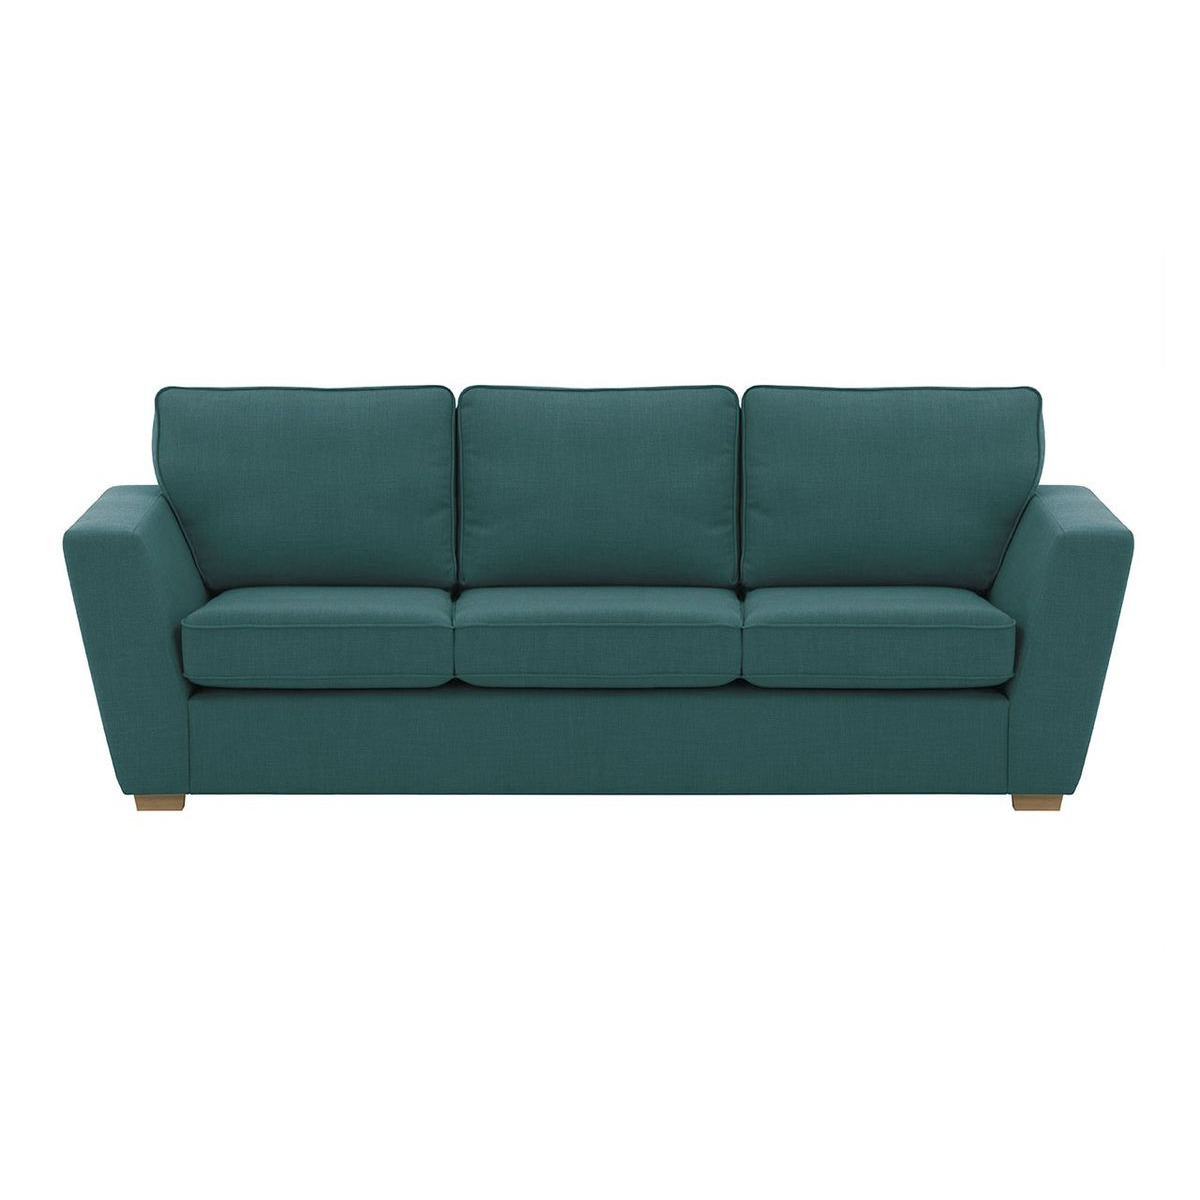 Inco 3 Seater Sofa, turquoise - image 1